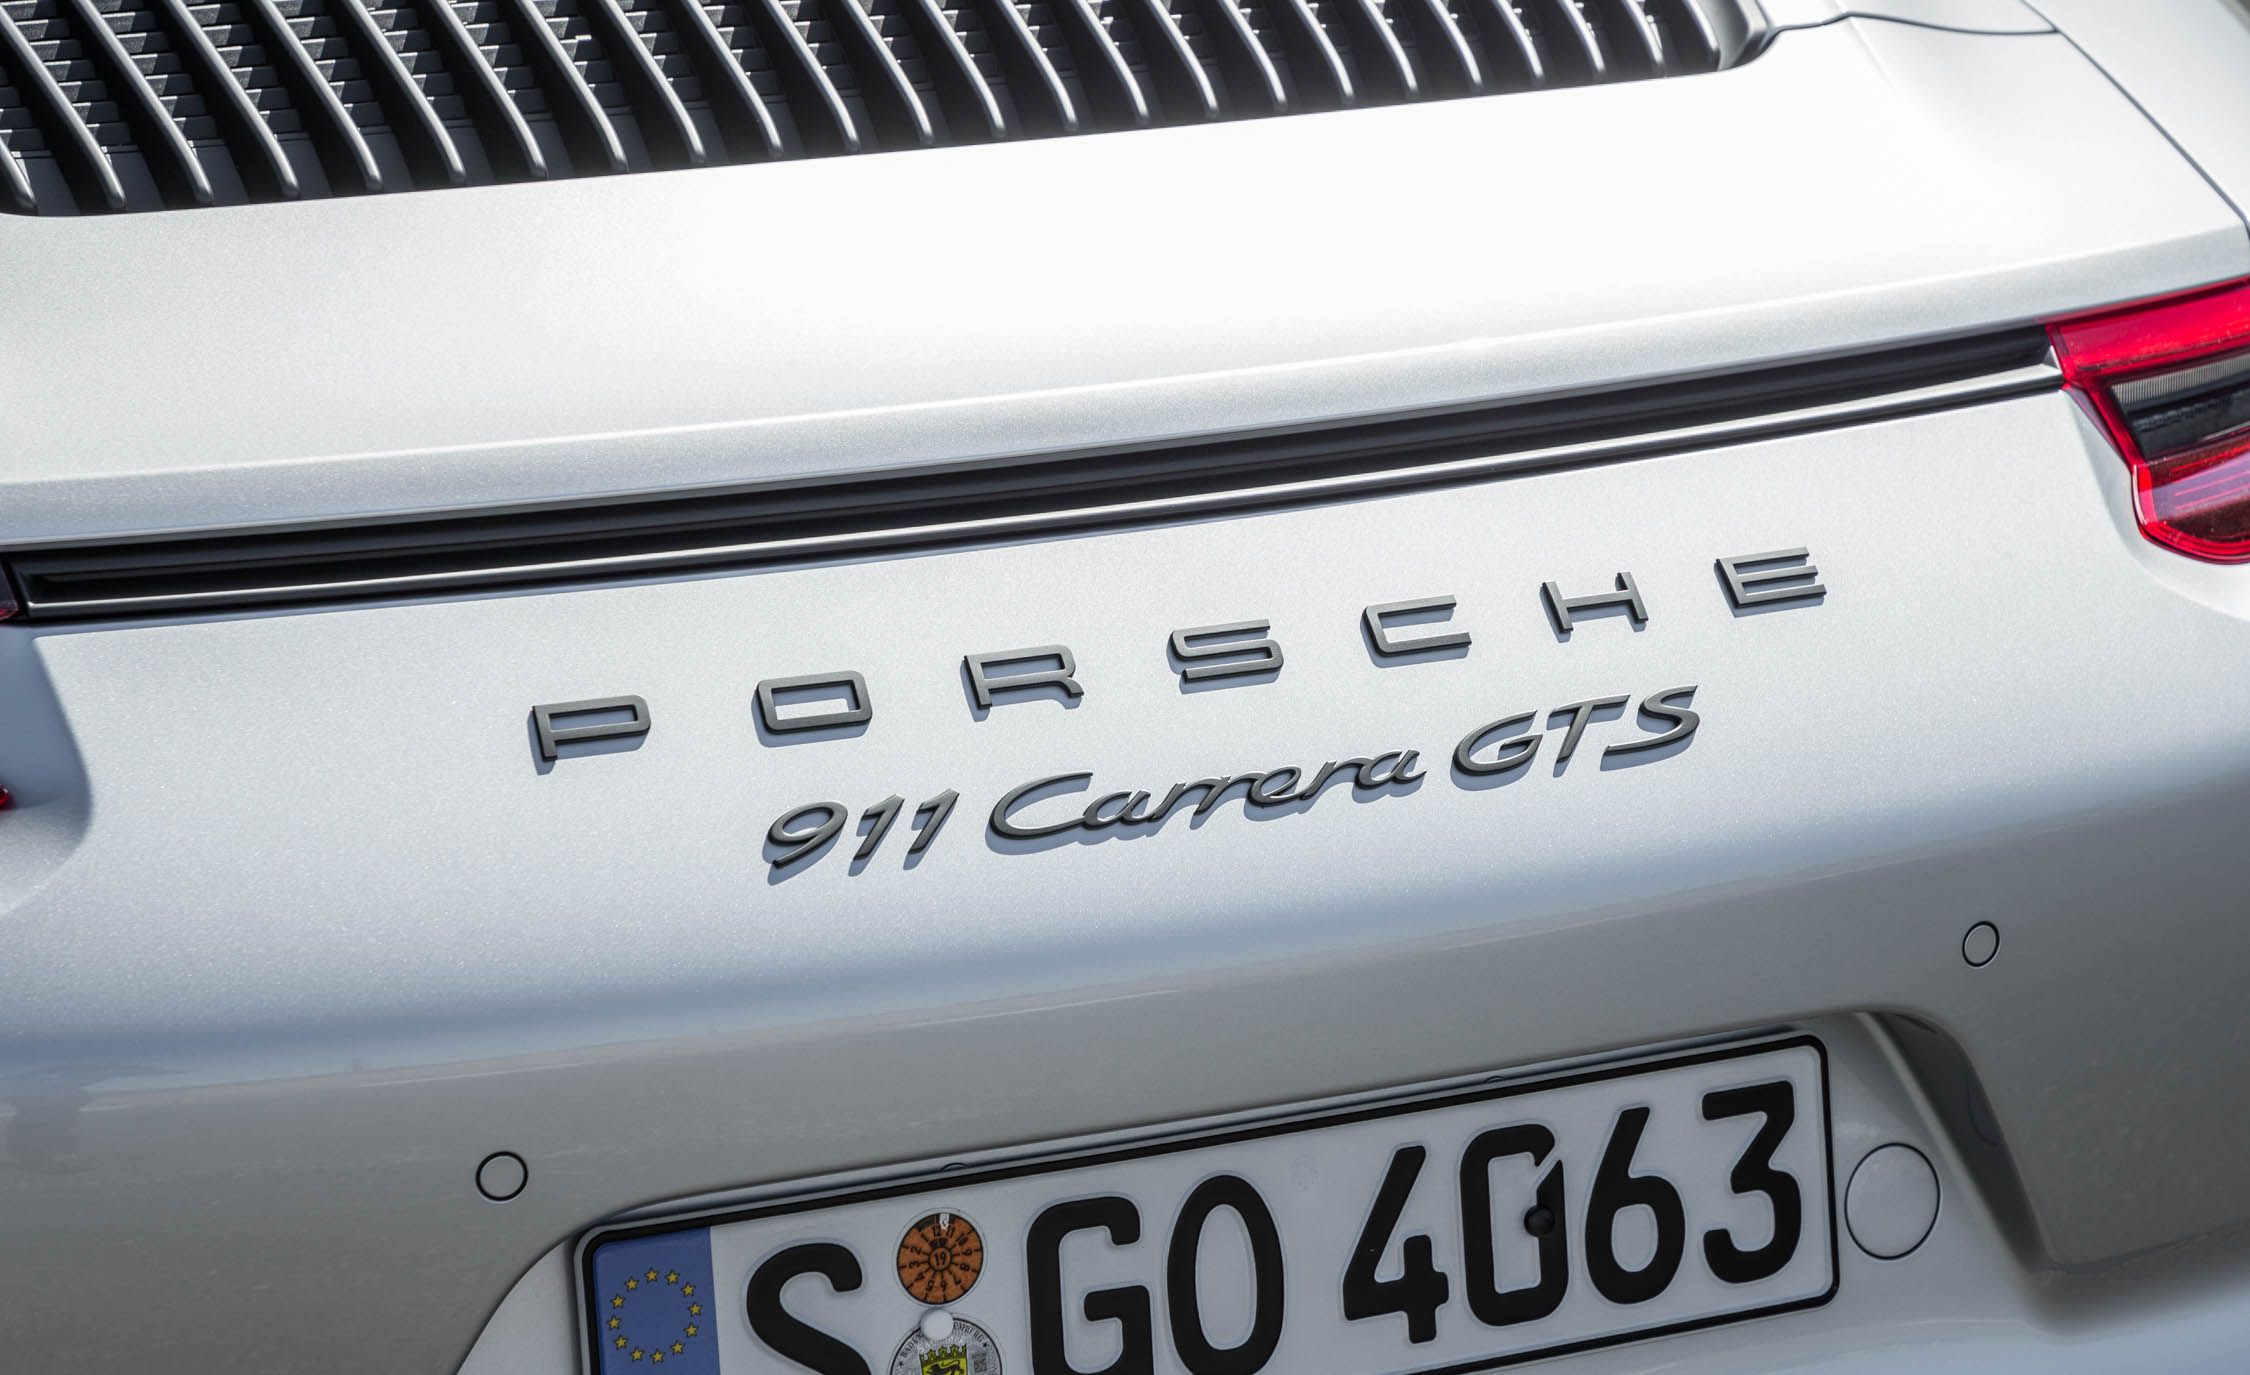 2017 Porsche 911 Carrera GTS Coupe Exterior View Rear Emblem (View 51 of 97)